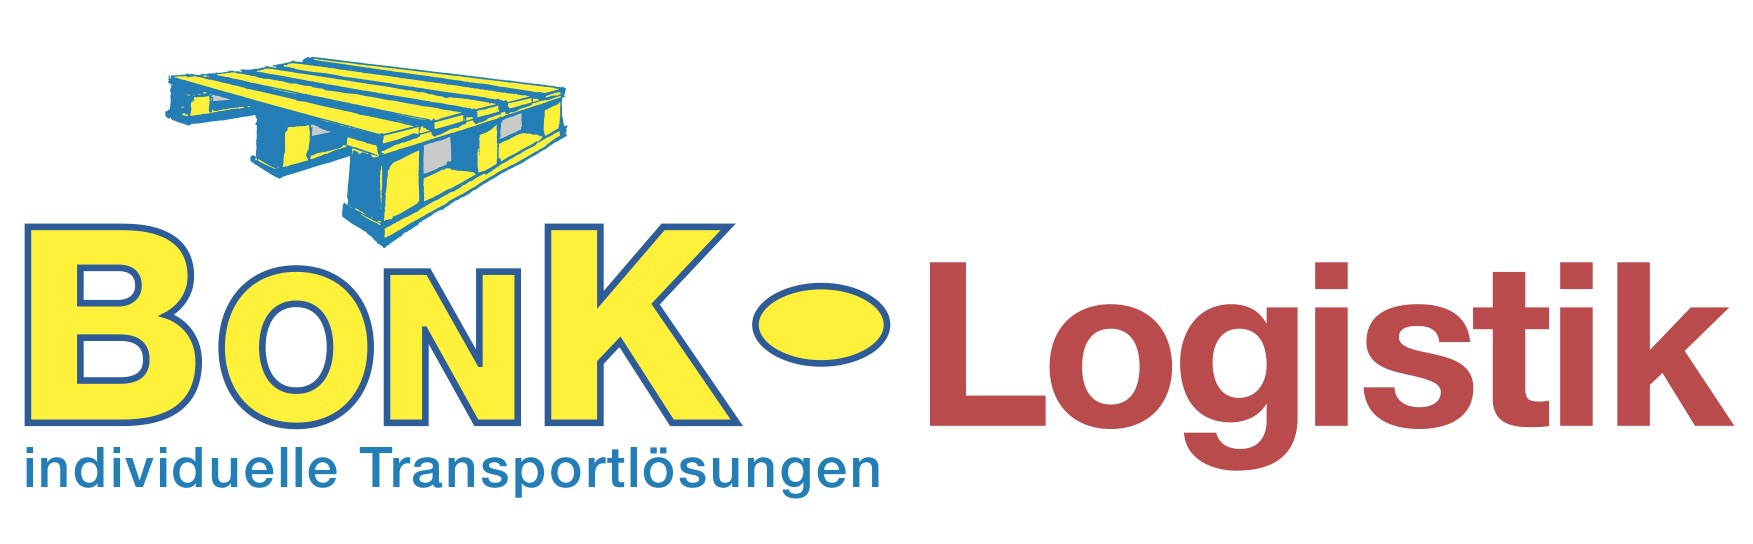 partner-logo-bonk logistik